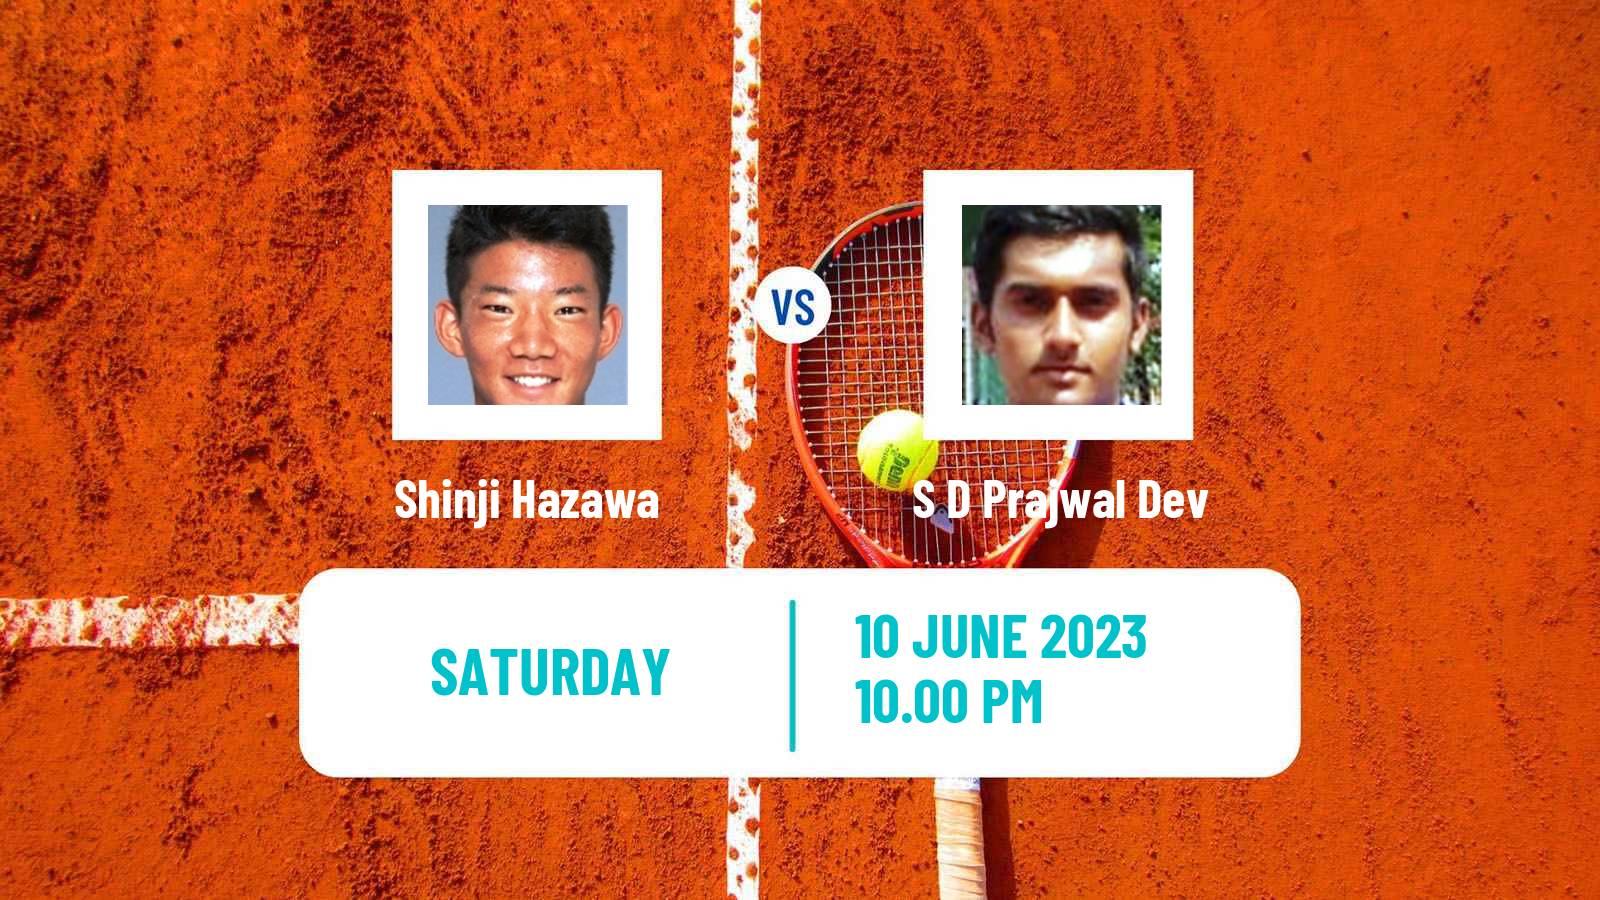 Tennis ITF M15 Nakhon Si Thammarat 2 Men Shinji Hazawa - S D Prajwal Dev